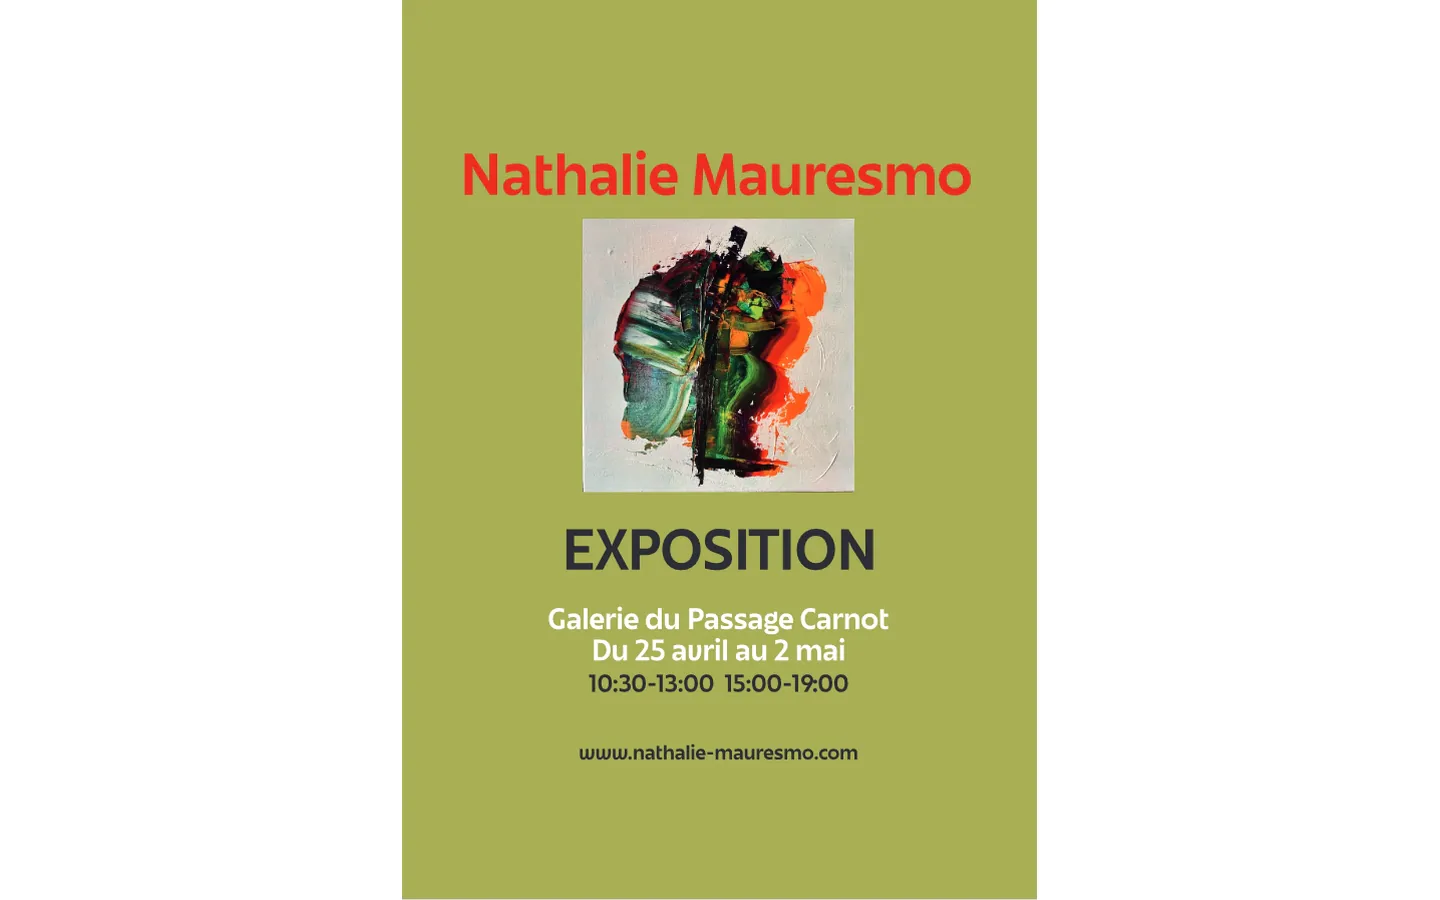 Exposition: Nathalie Mauresmo